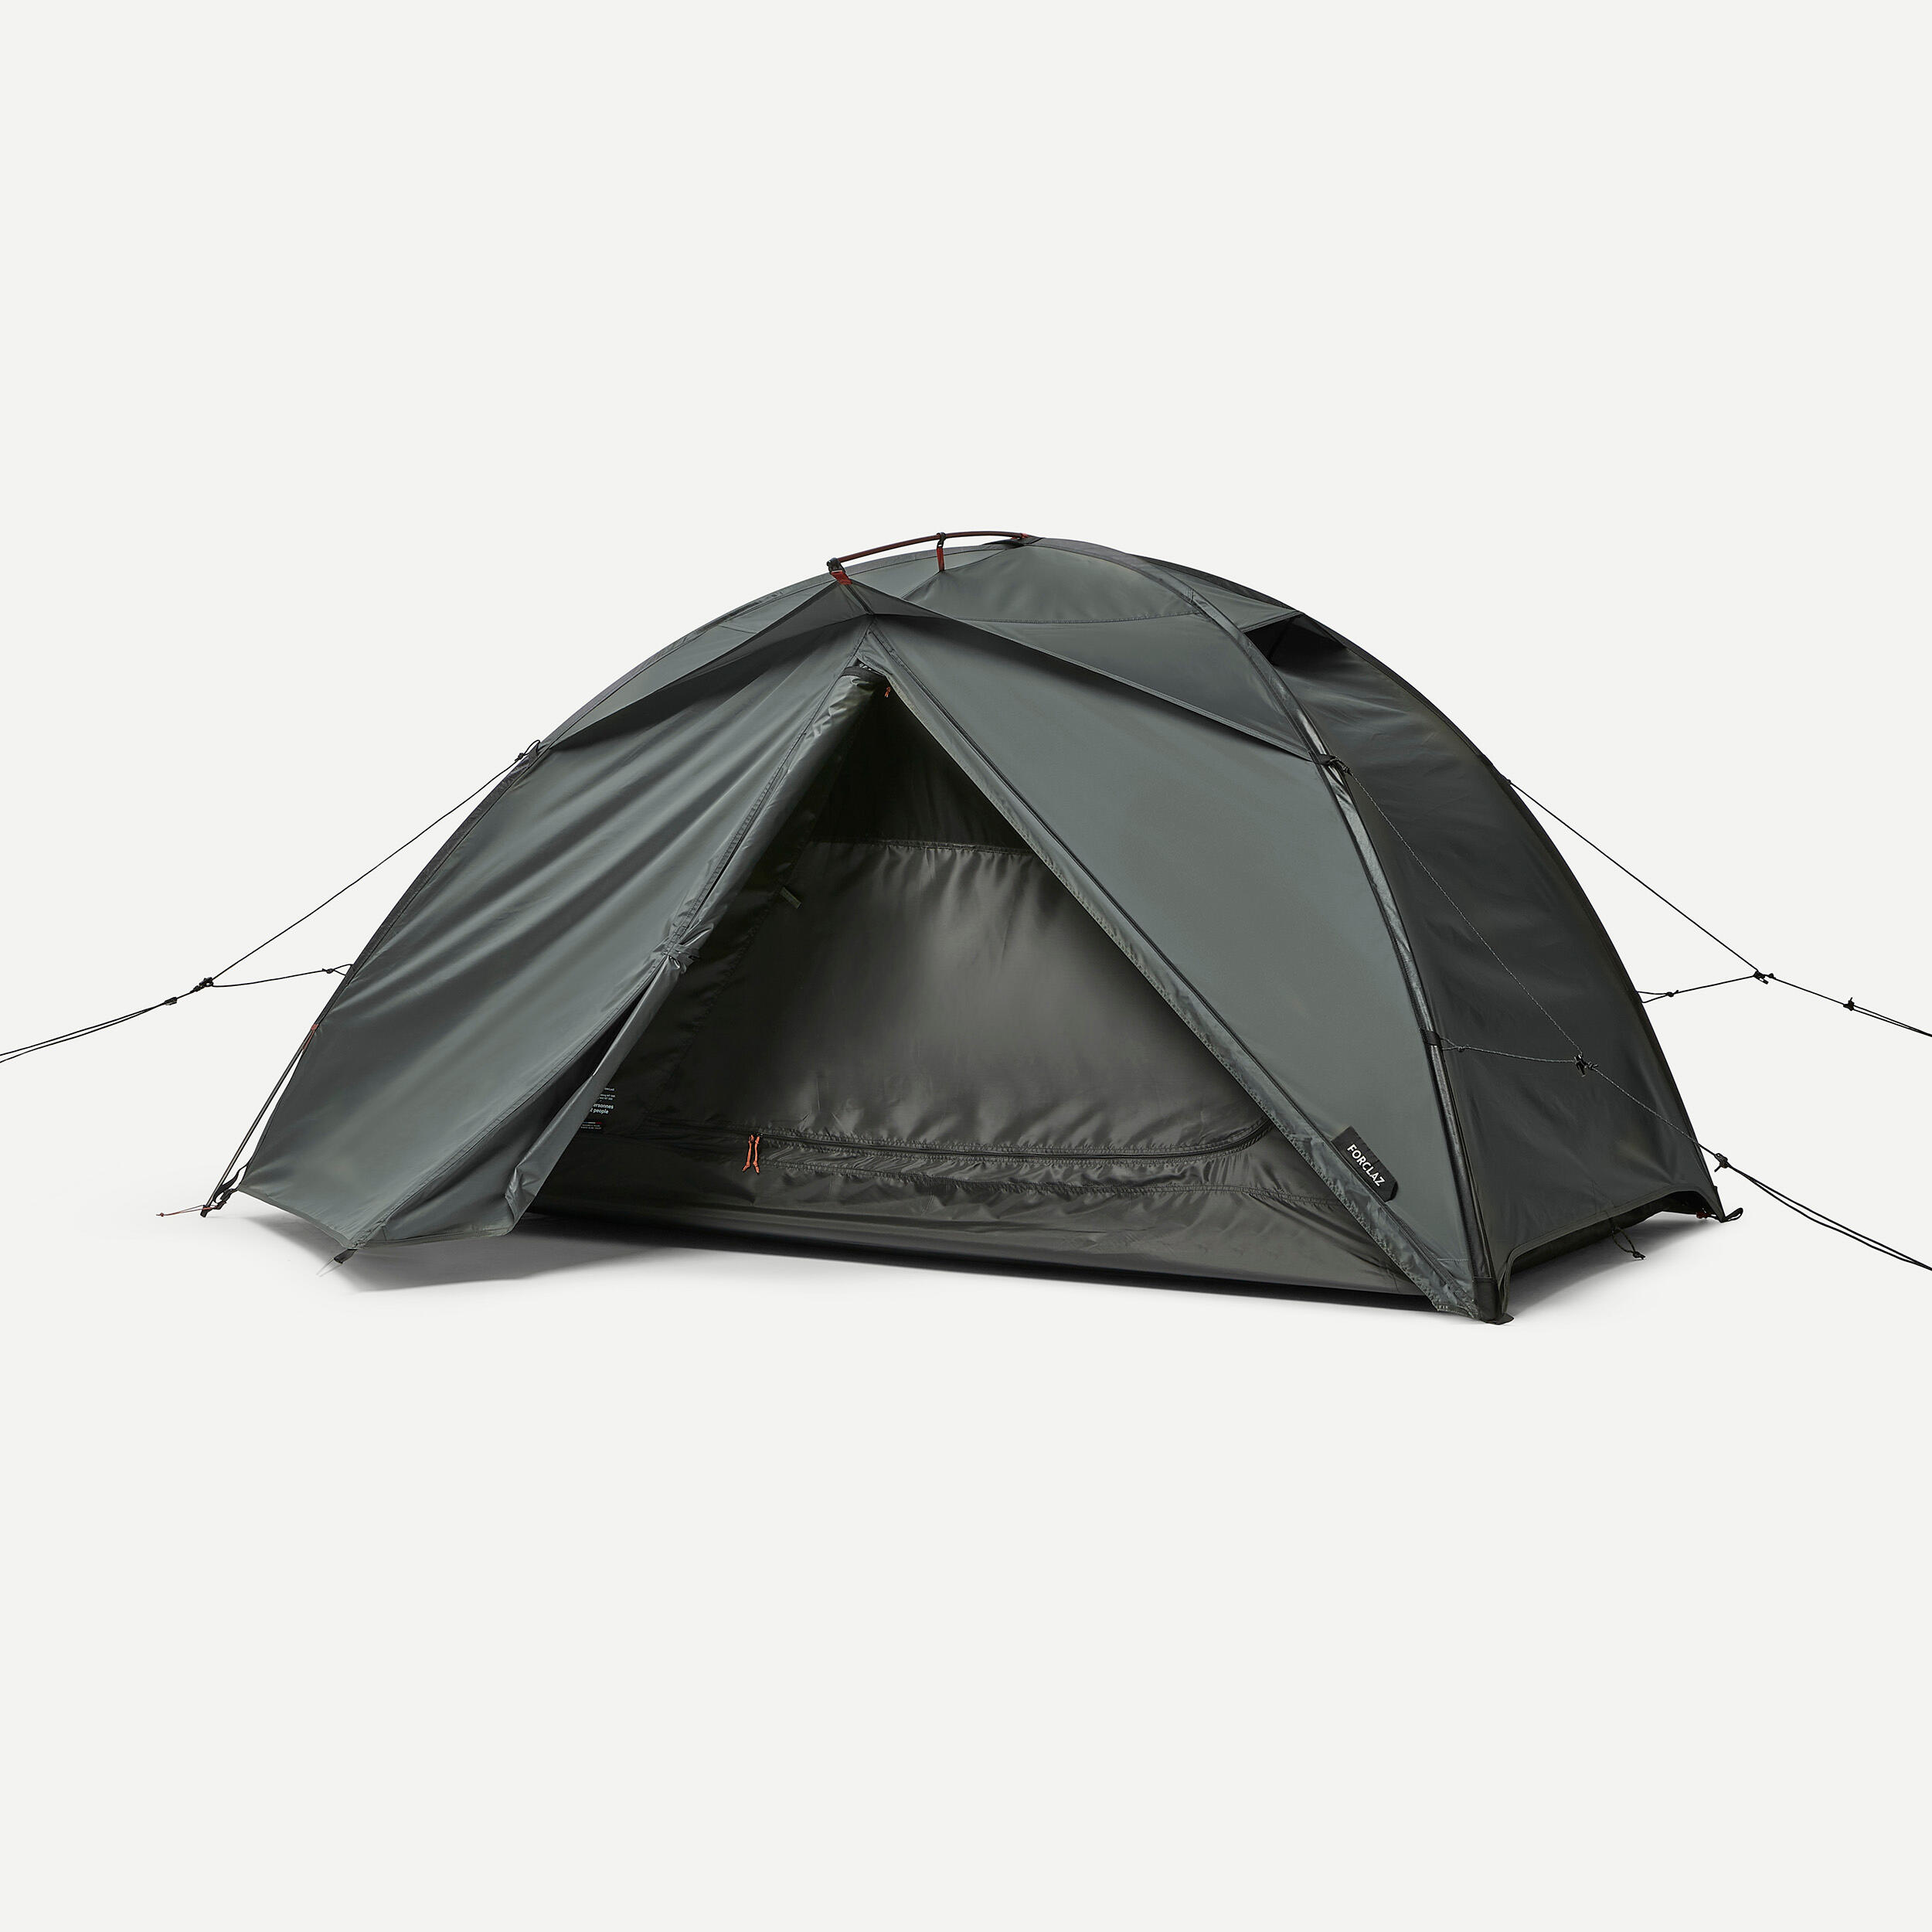 Trekking dome tent - 2-person - MT500 1/7